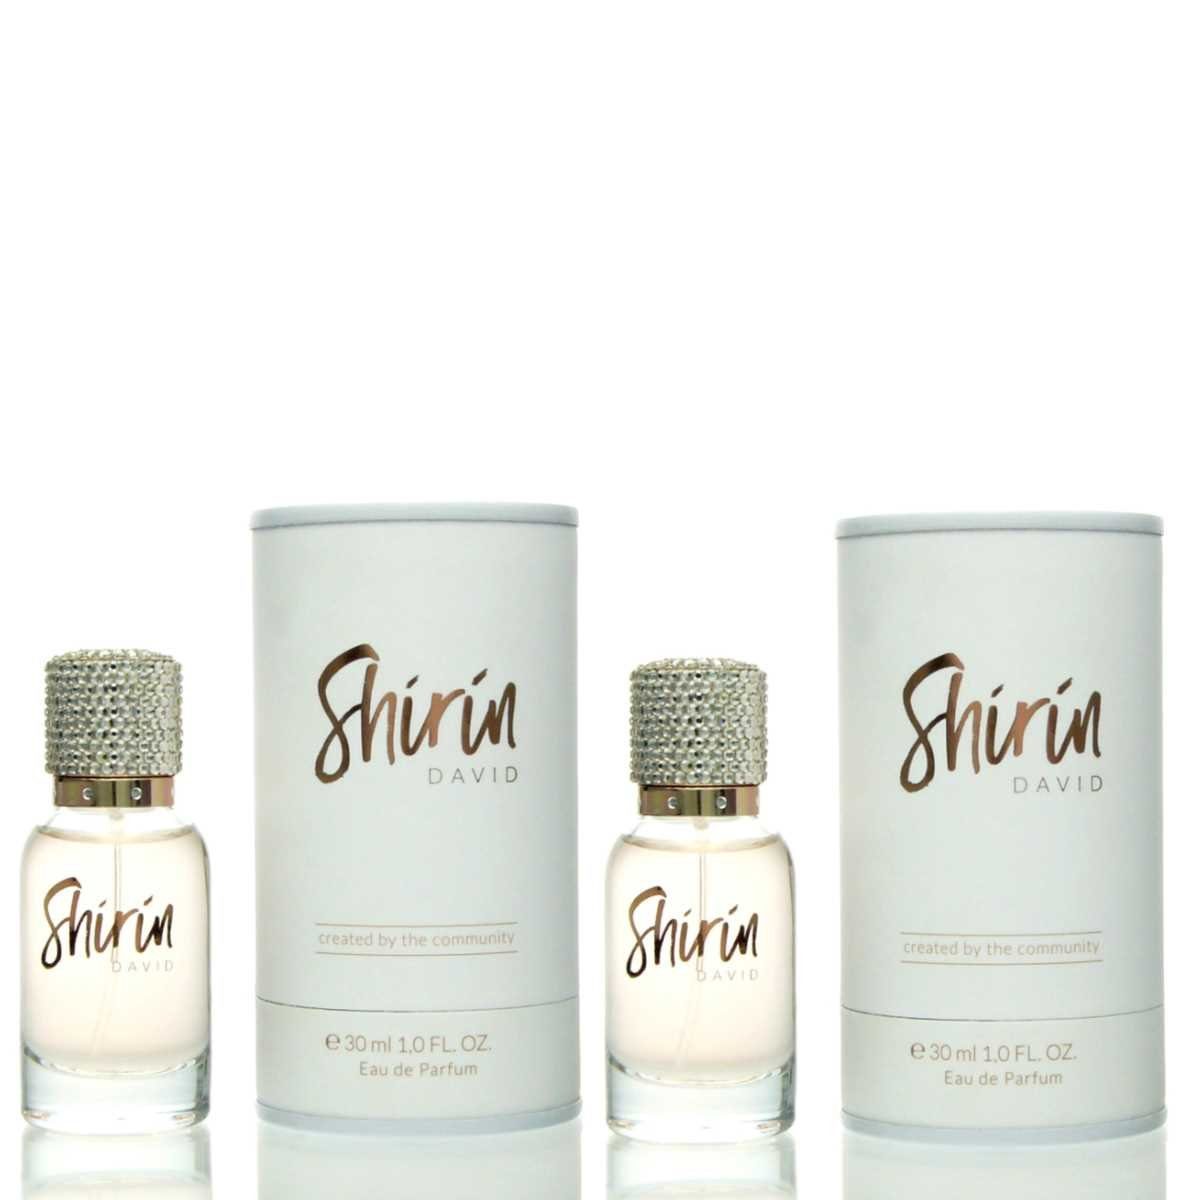 Shirin David Eau de Parfum 2x Shirin David created by the community Eau de Parfum 30 ml | Eau de Parfum